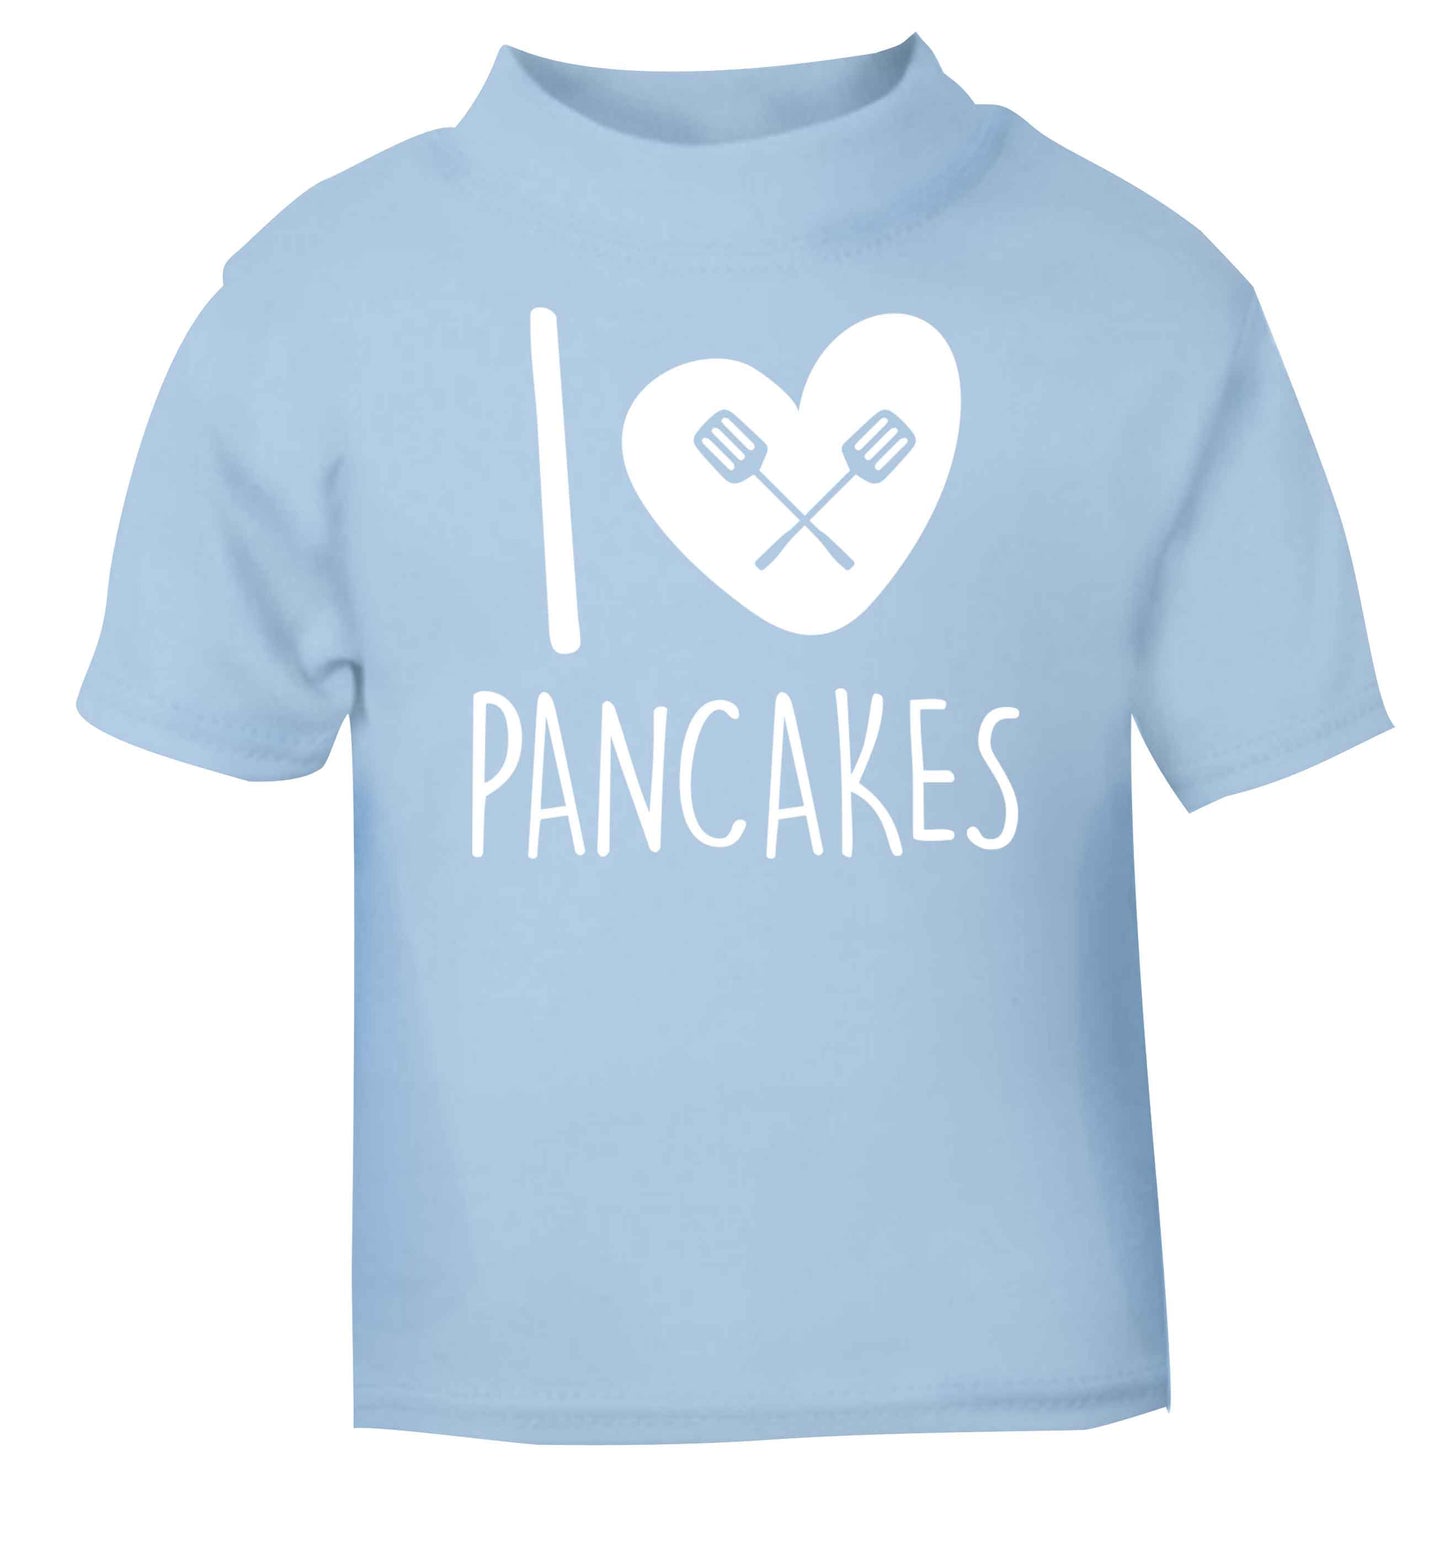 I love pancakes light blue baby toddler Tshirt 2 Years